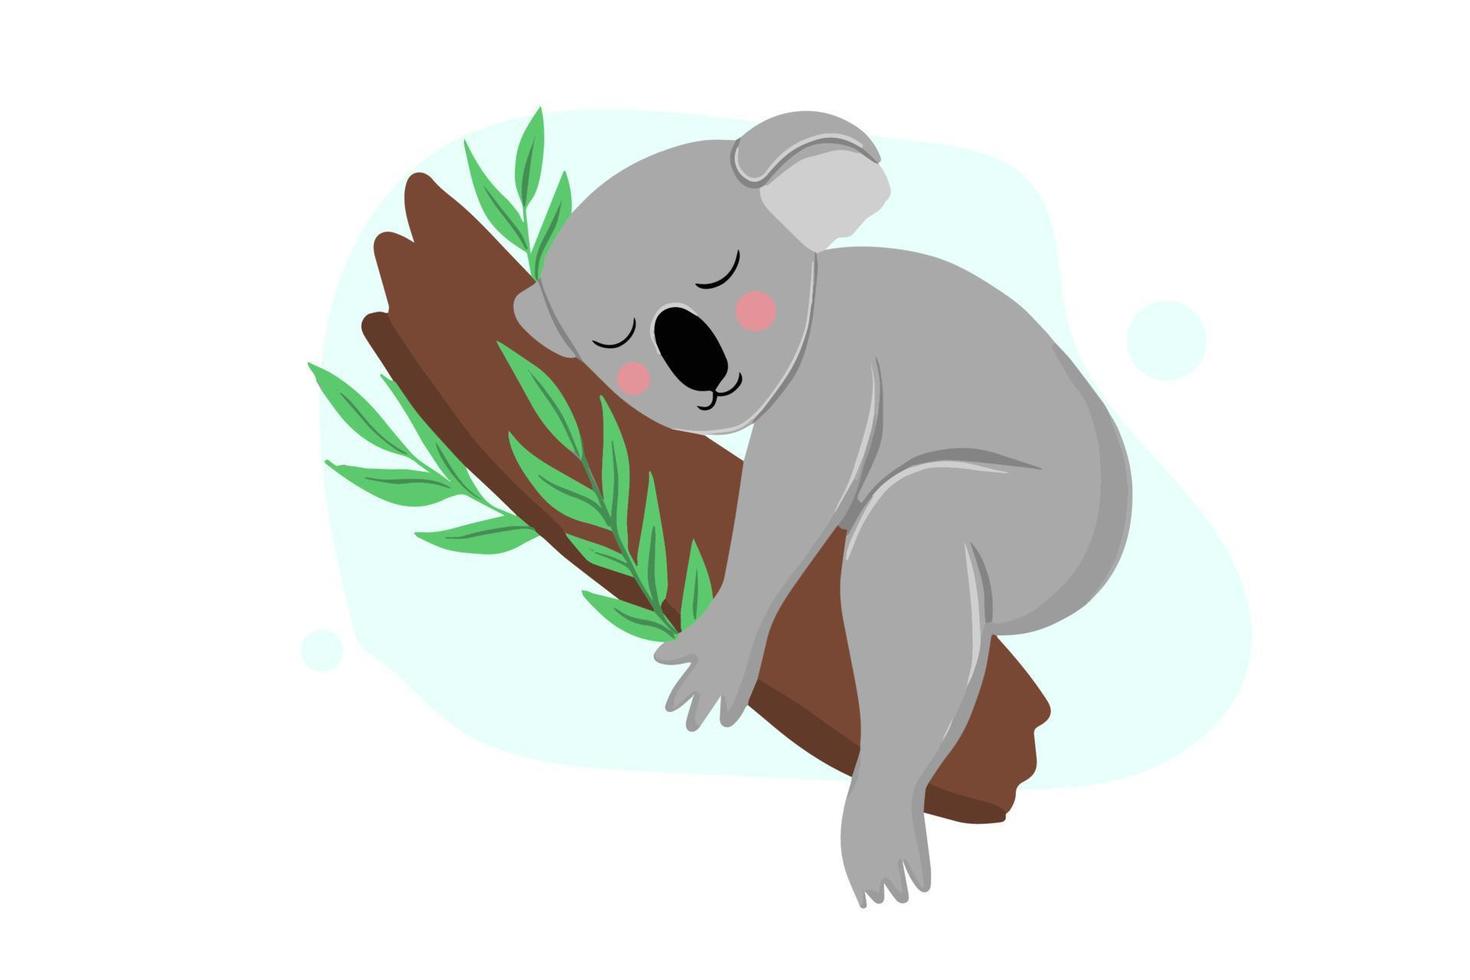 mamá koala y su bebé en eucalipto. ilustración vectorial vector